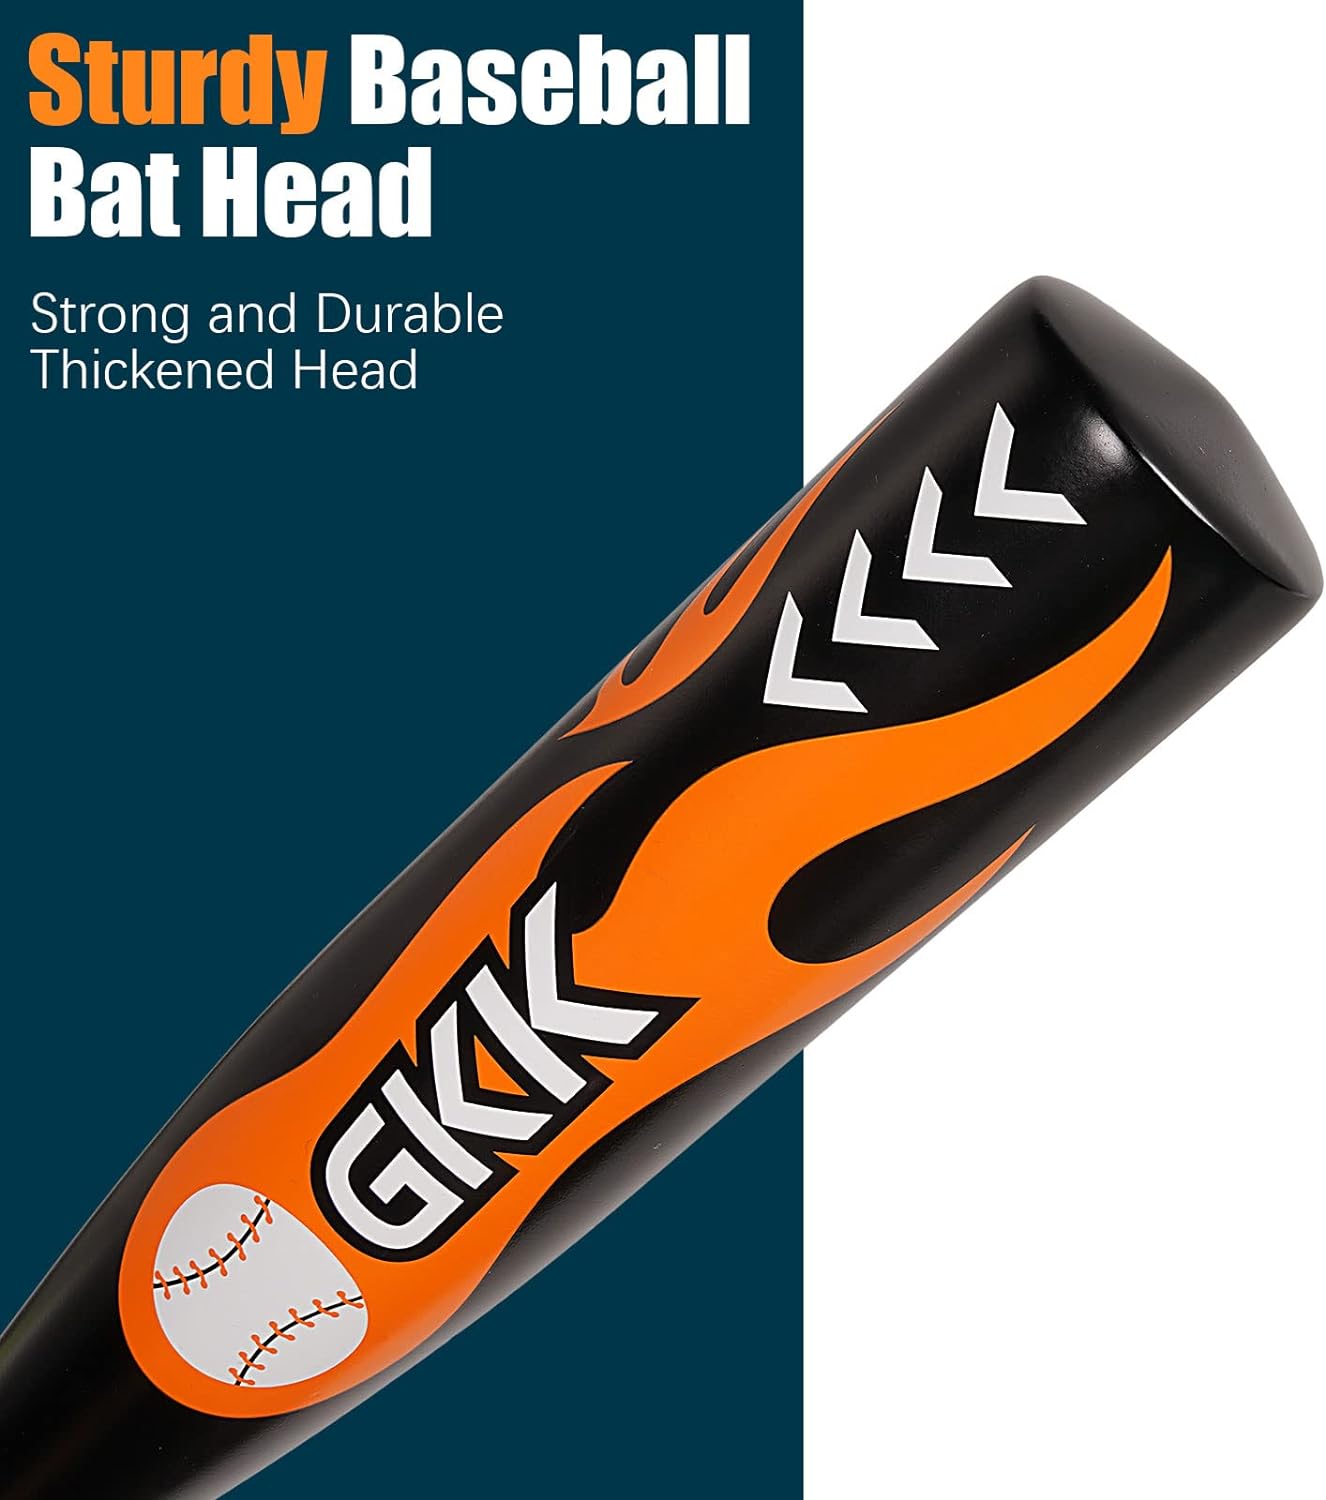 GKK Baseball Bat Kids Baseball Bat Series |-11| Tee Ball Bat Lightweight Batting Practice Bat Baseball Training Equipment |1 Pc. Aluminum| 2 1/4 Barrel | 24, 25, 26